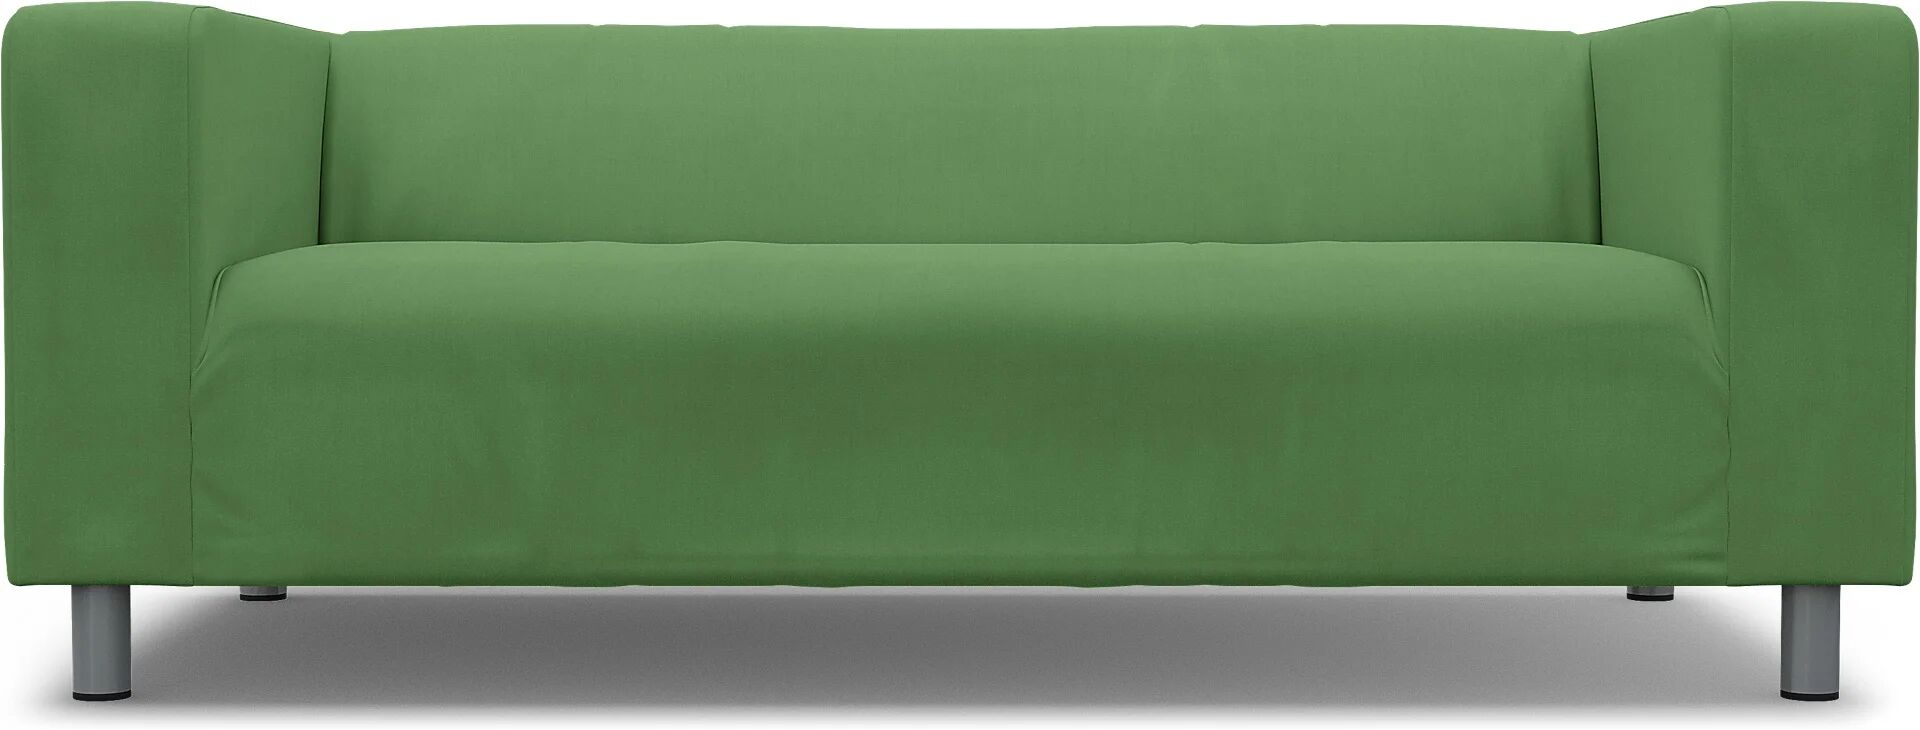 IKEA - Klippan 2 Seater Sofa Cover, Apple Green, Linen - Bemz